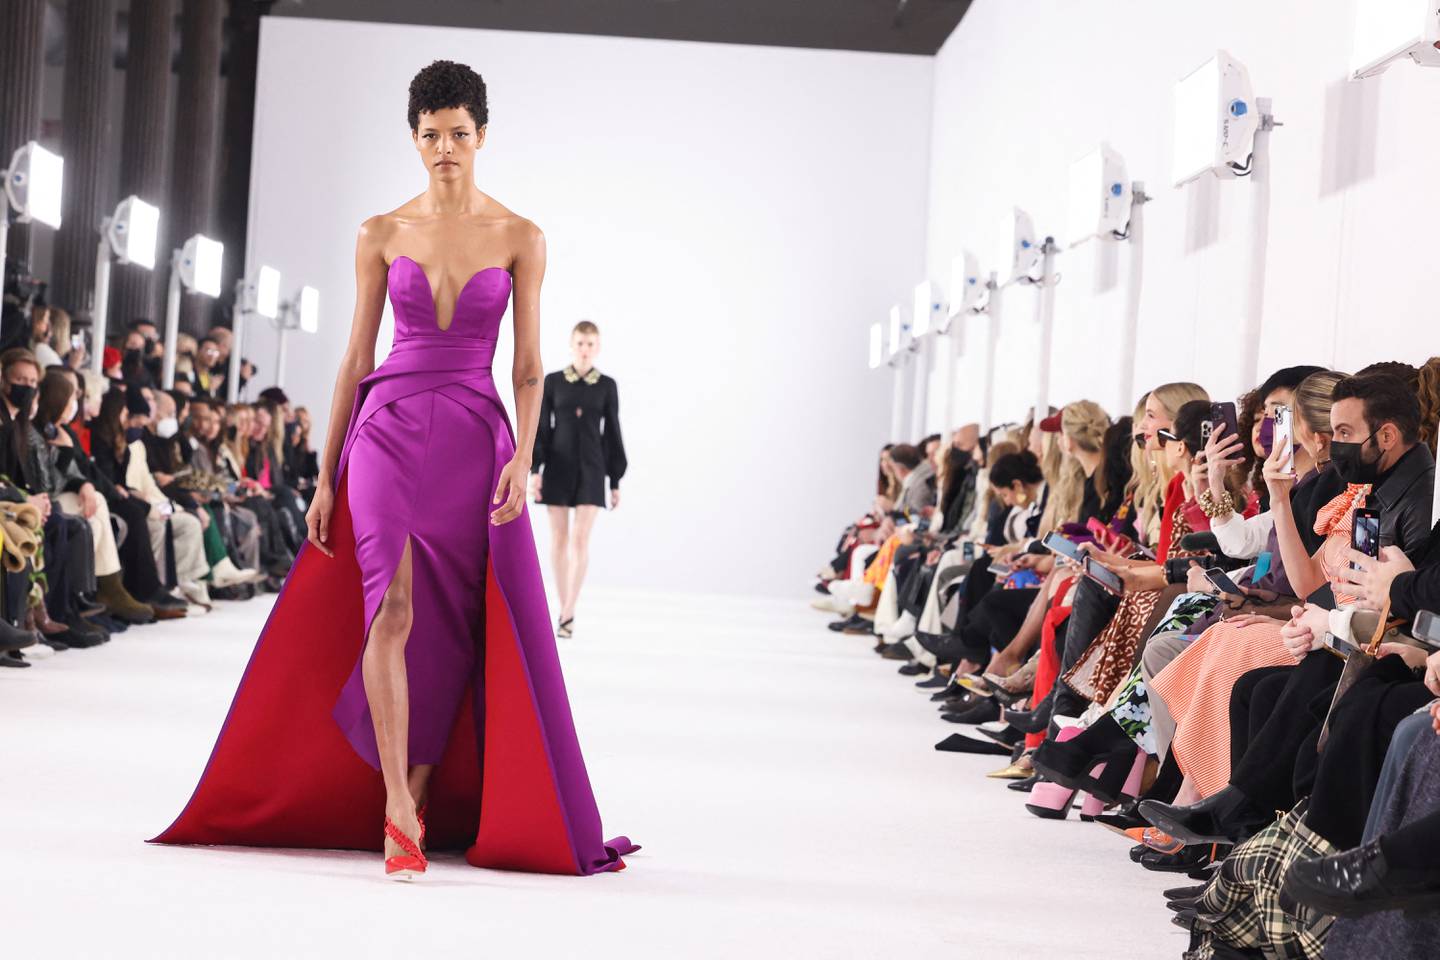 Models on the Carolina Herrera catwalk during New York Fashion Week on February 14. Reuters